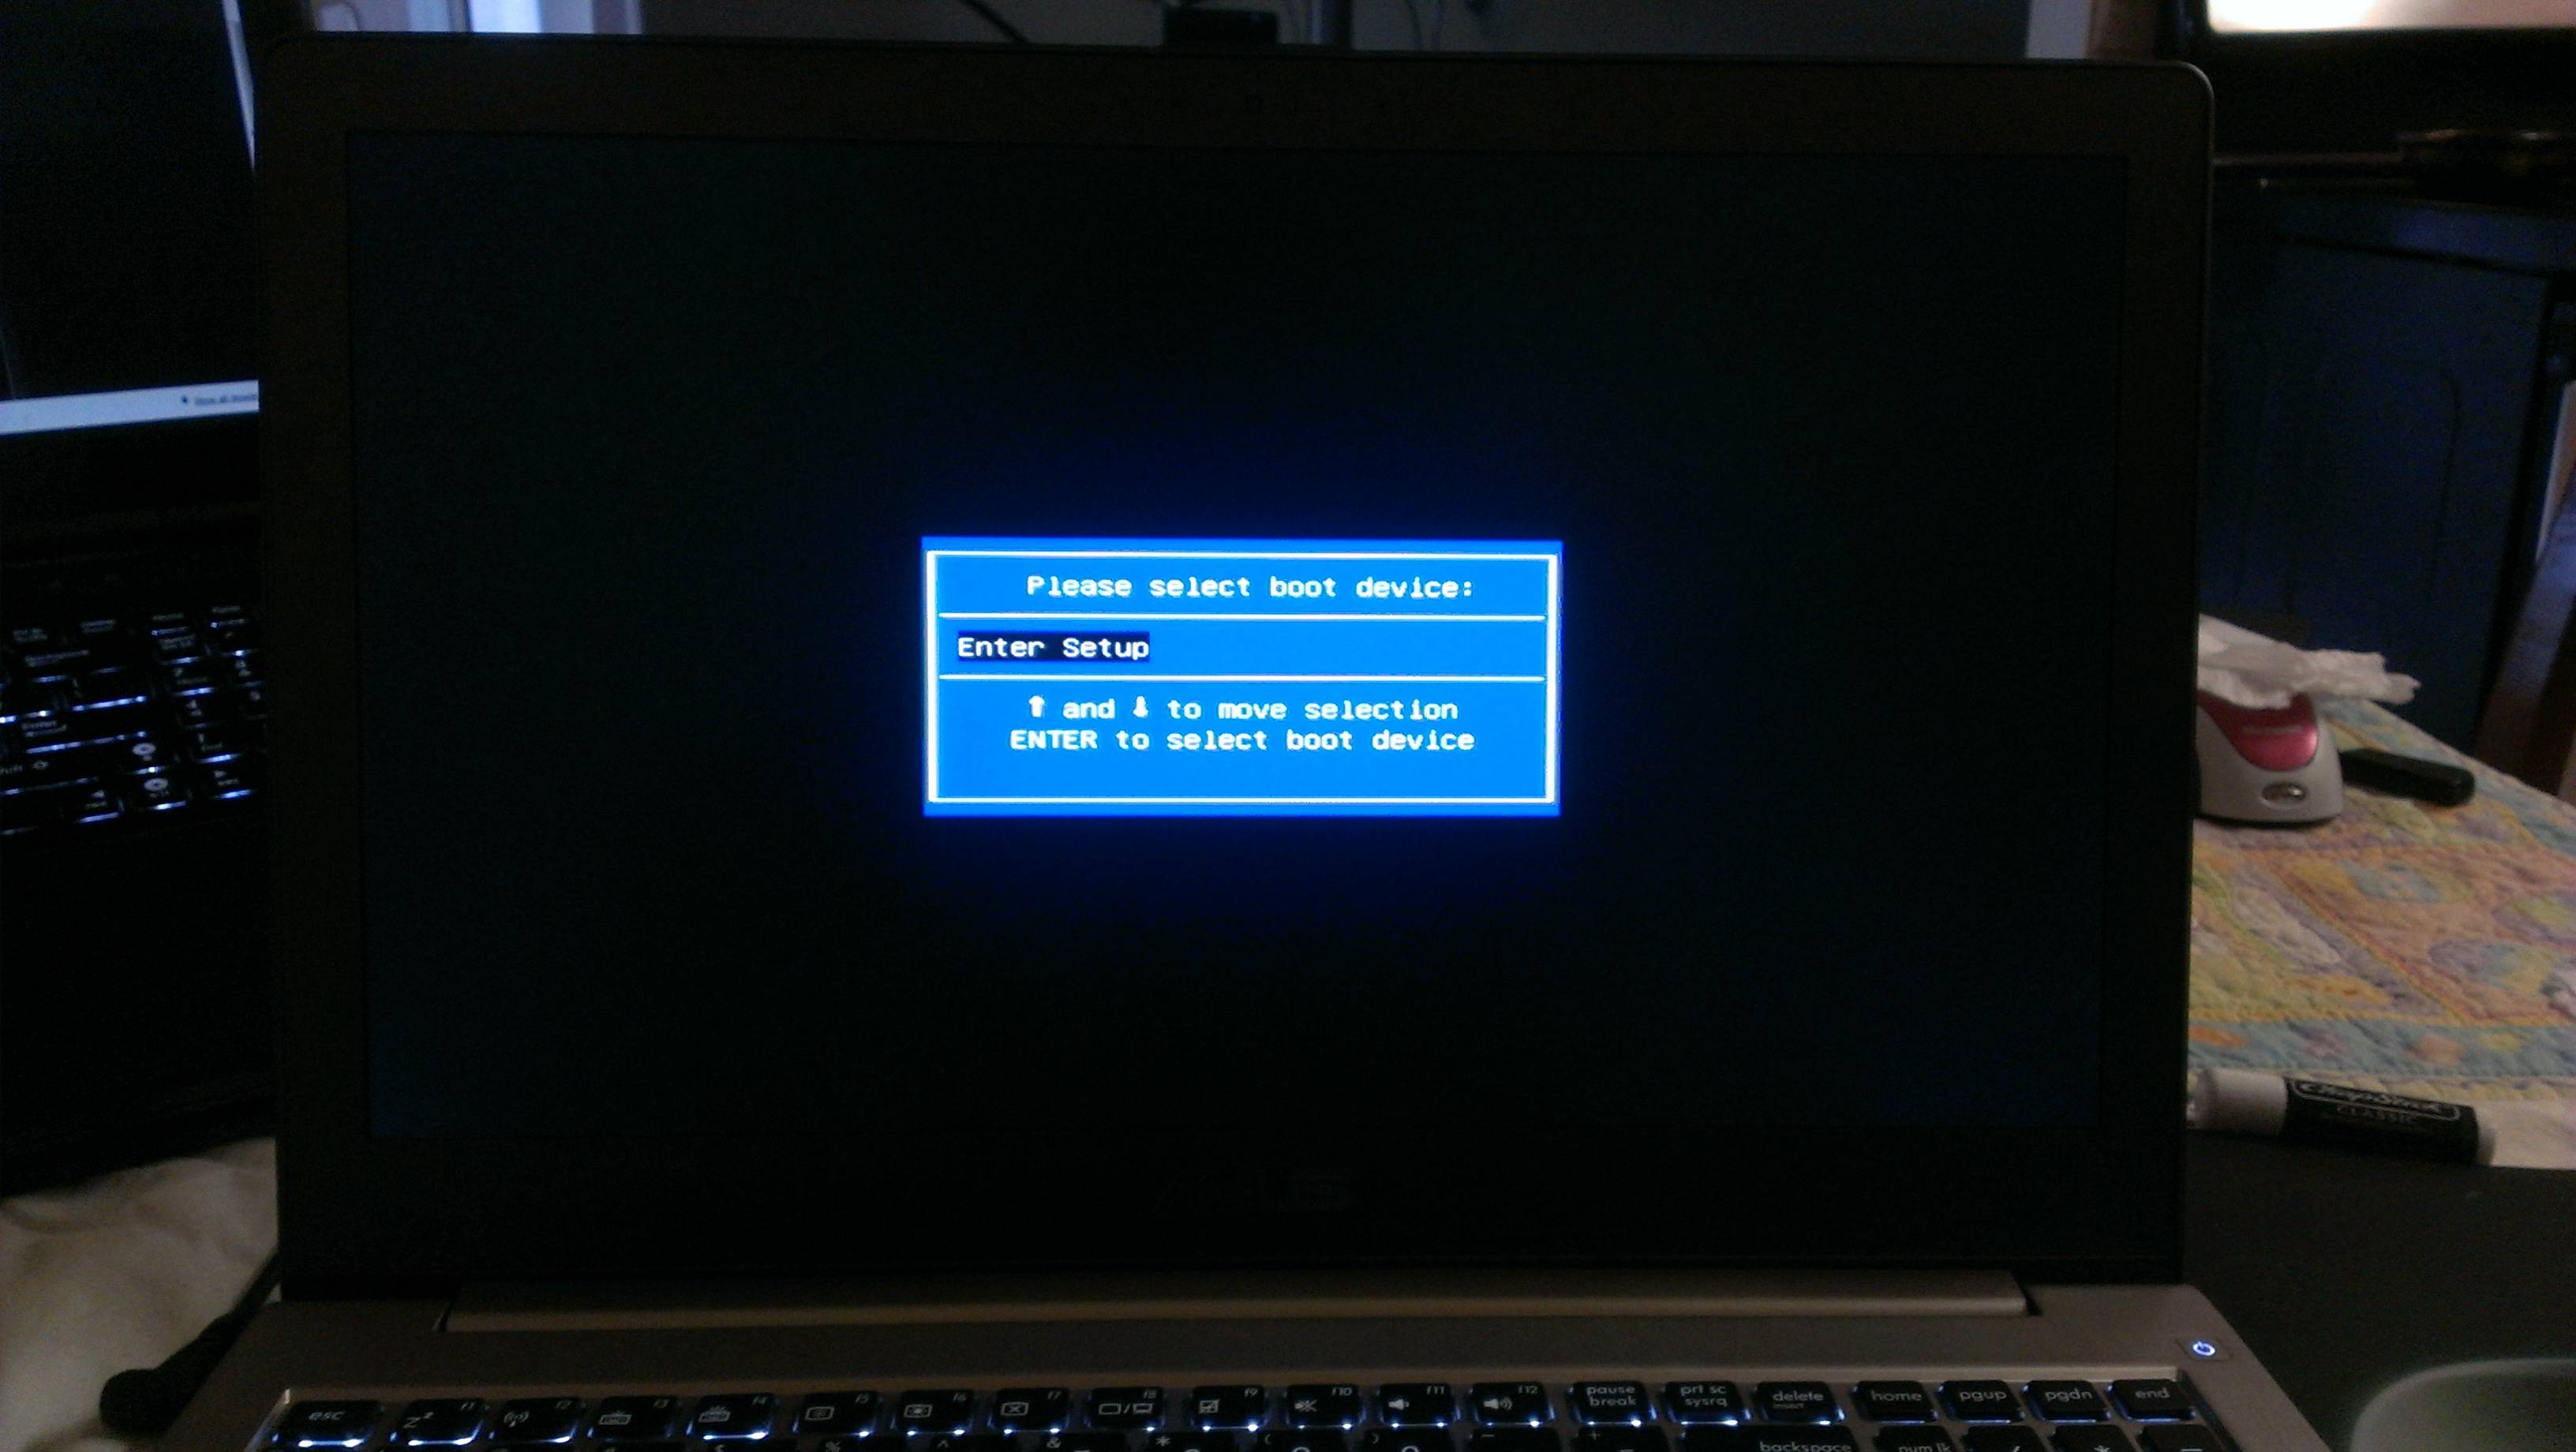 ASUS ZENBOOK UX51VZ: BIOS fail problem after 204 update